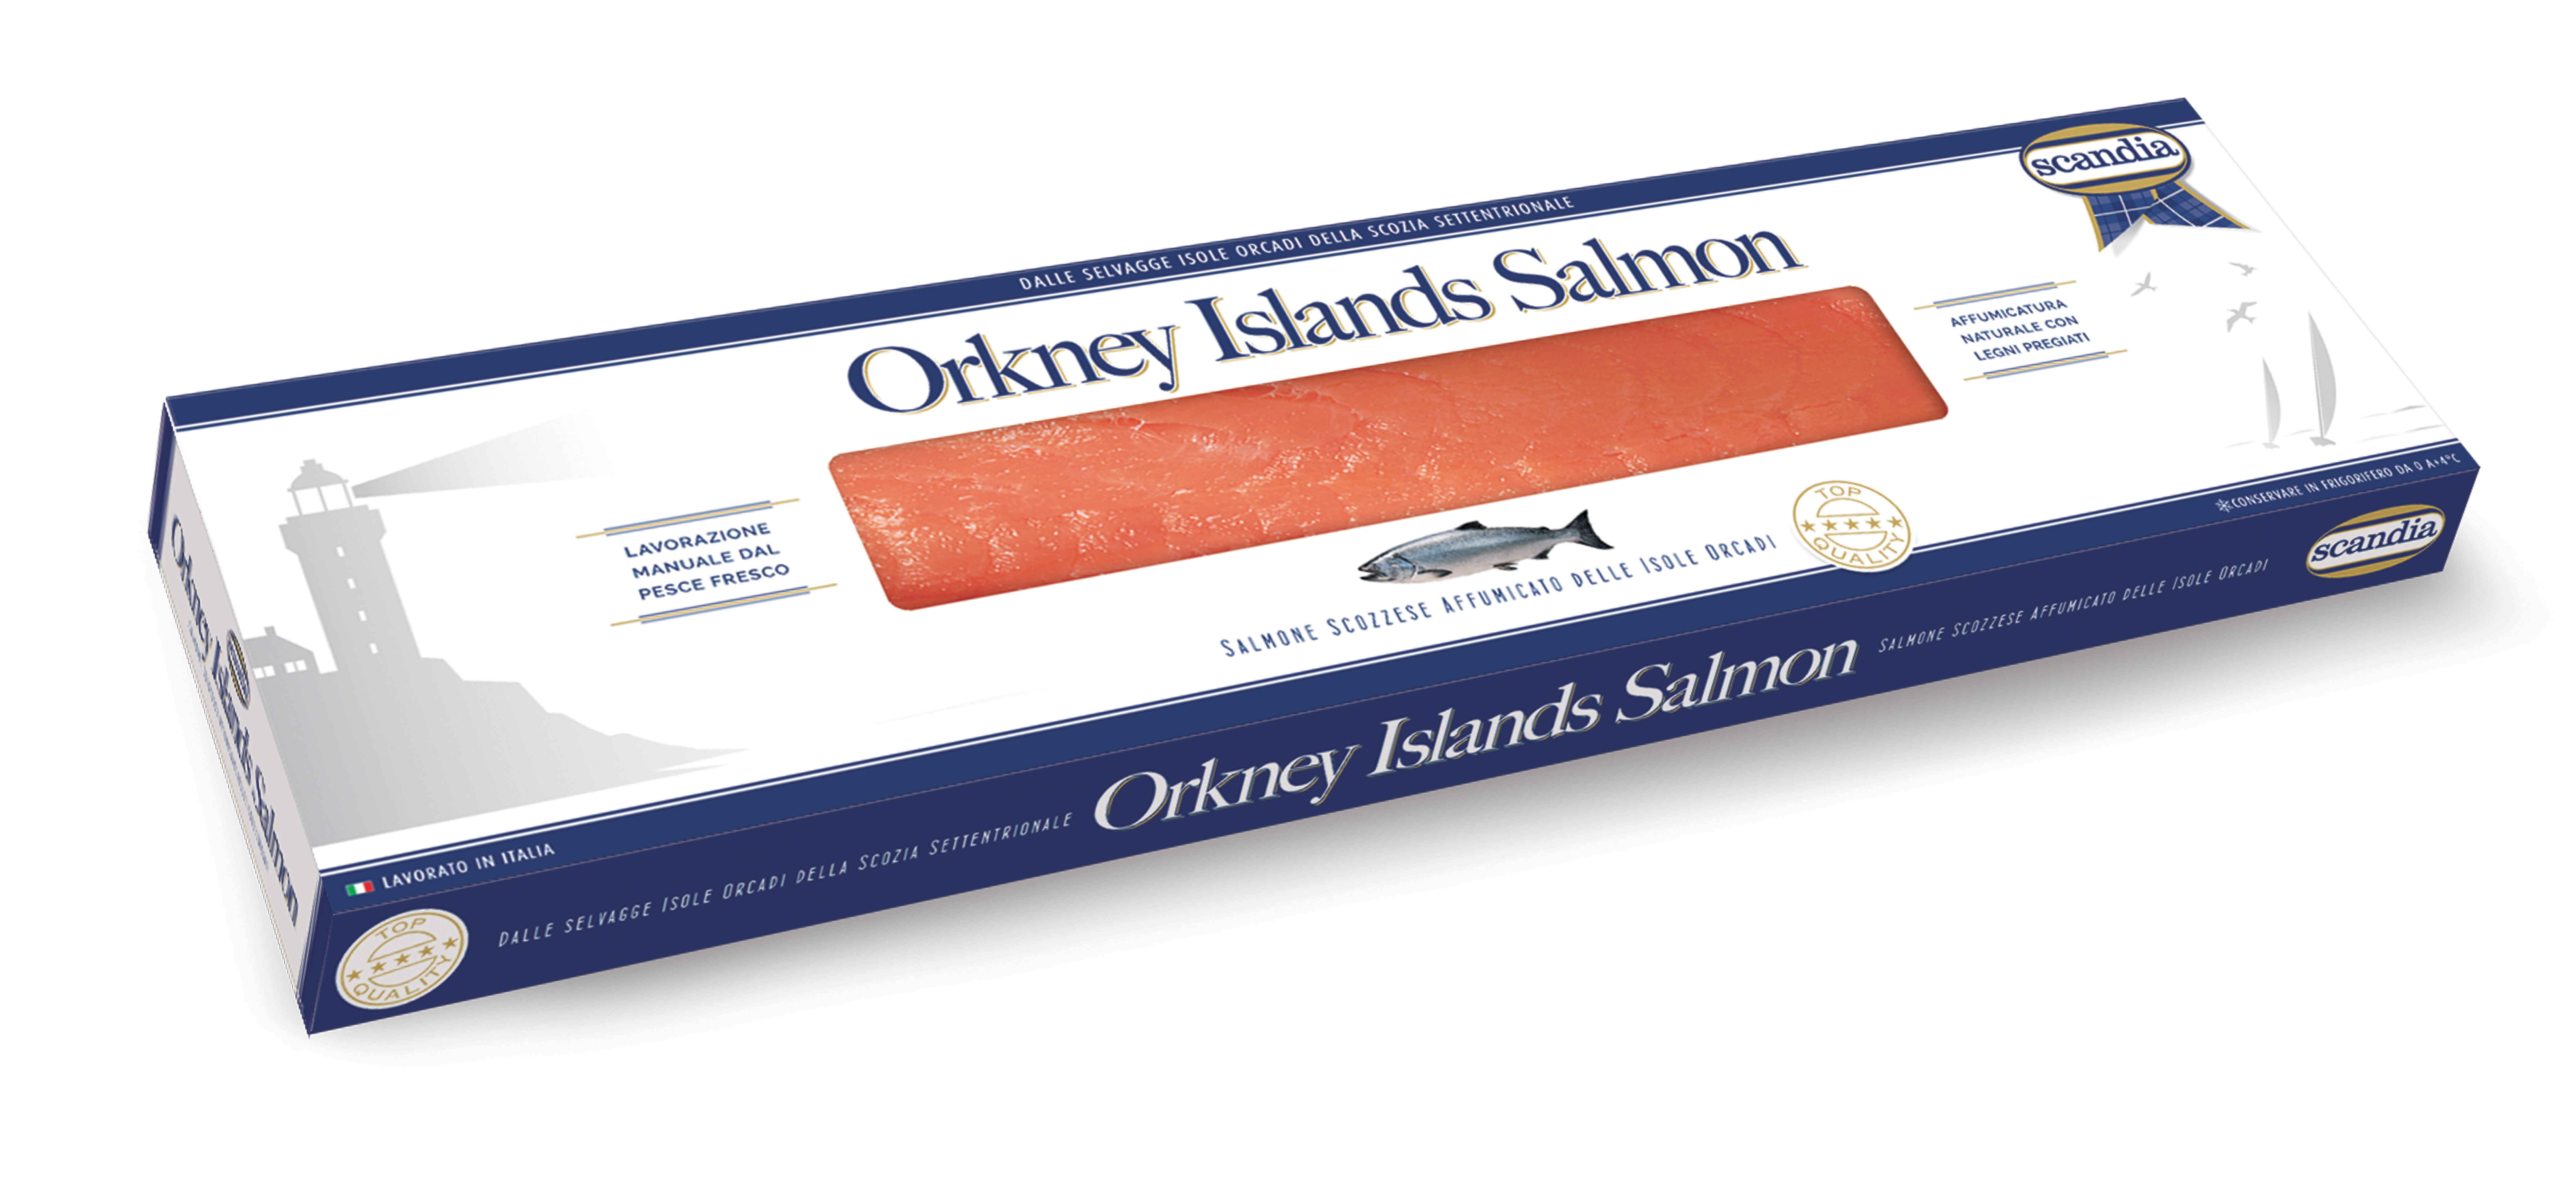 Orkney Islands Salmon - Loin preaff. Premium